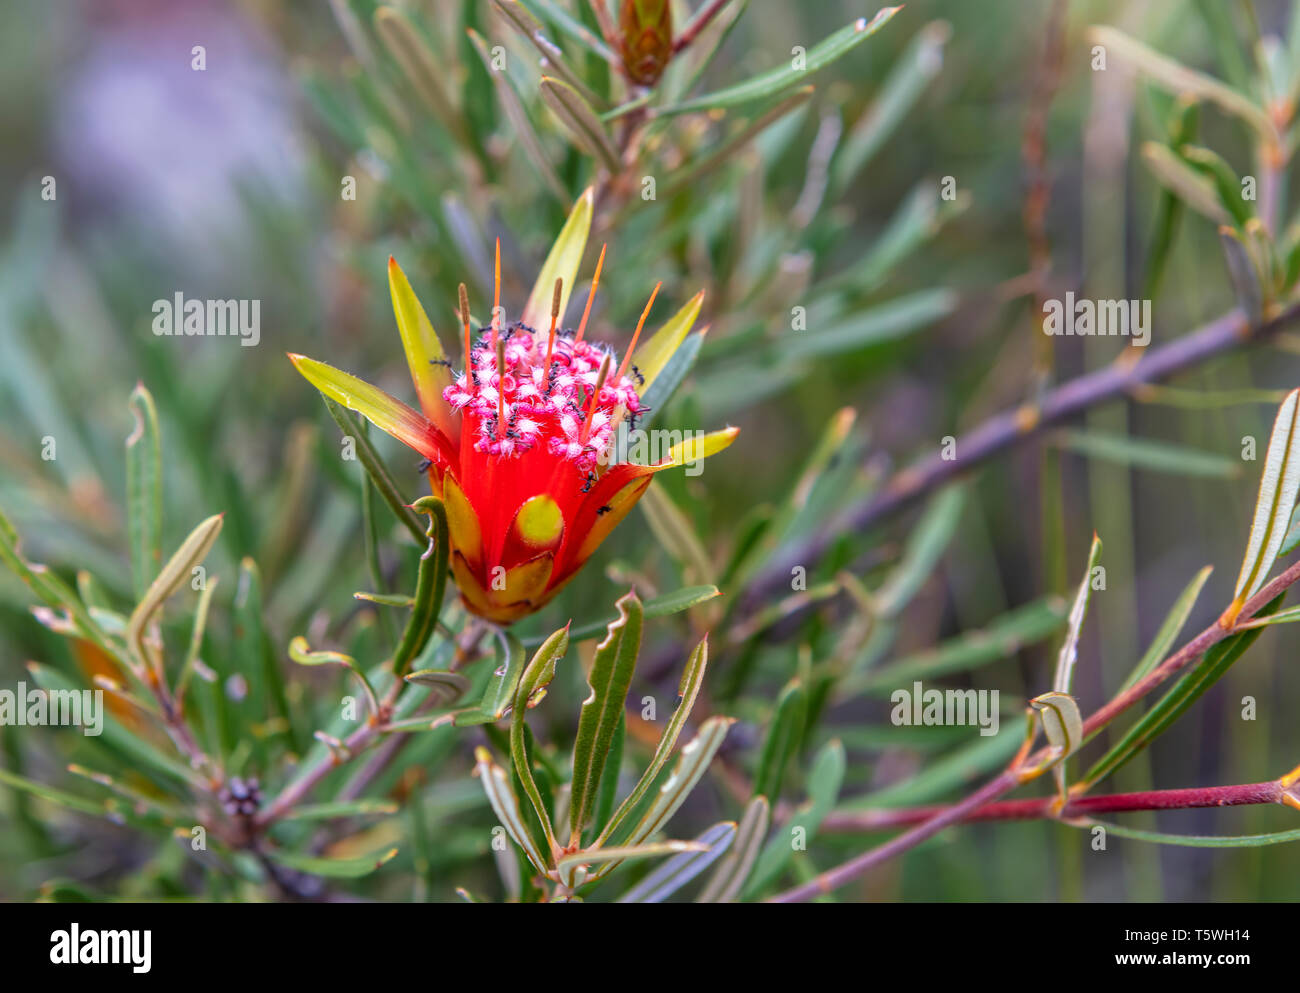 Red flower of native Australian plant Lambertia or mountain devil close-up. Stock Photo